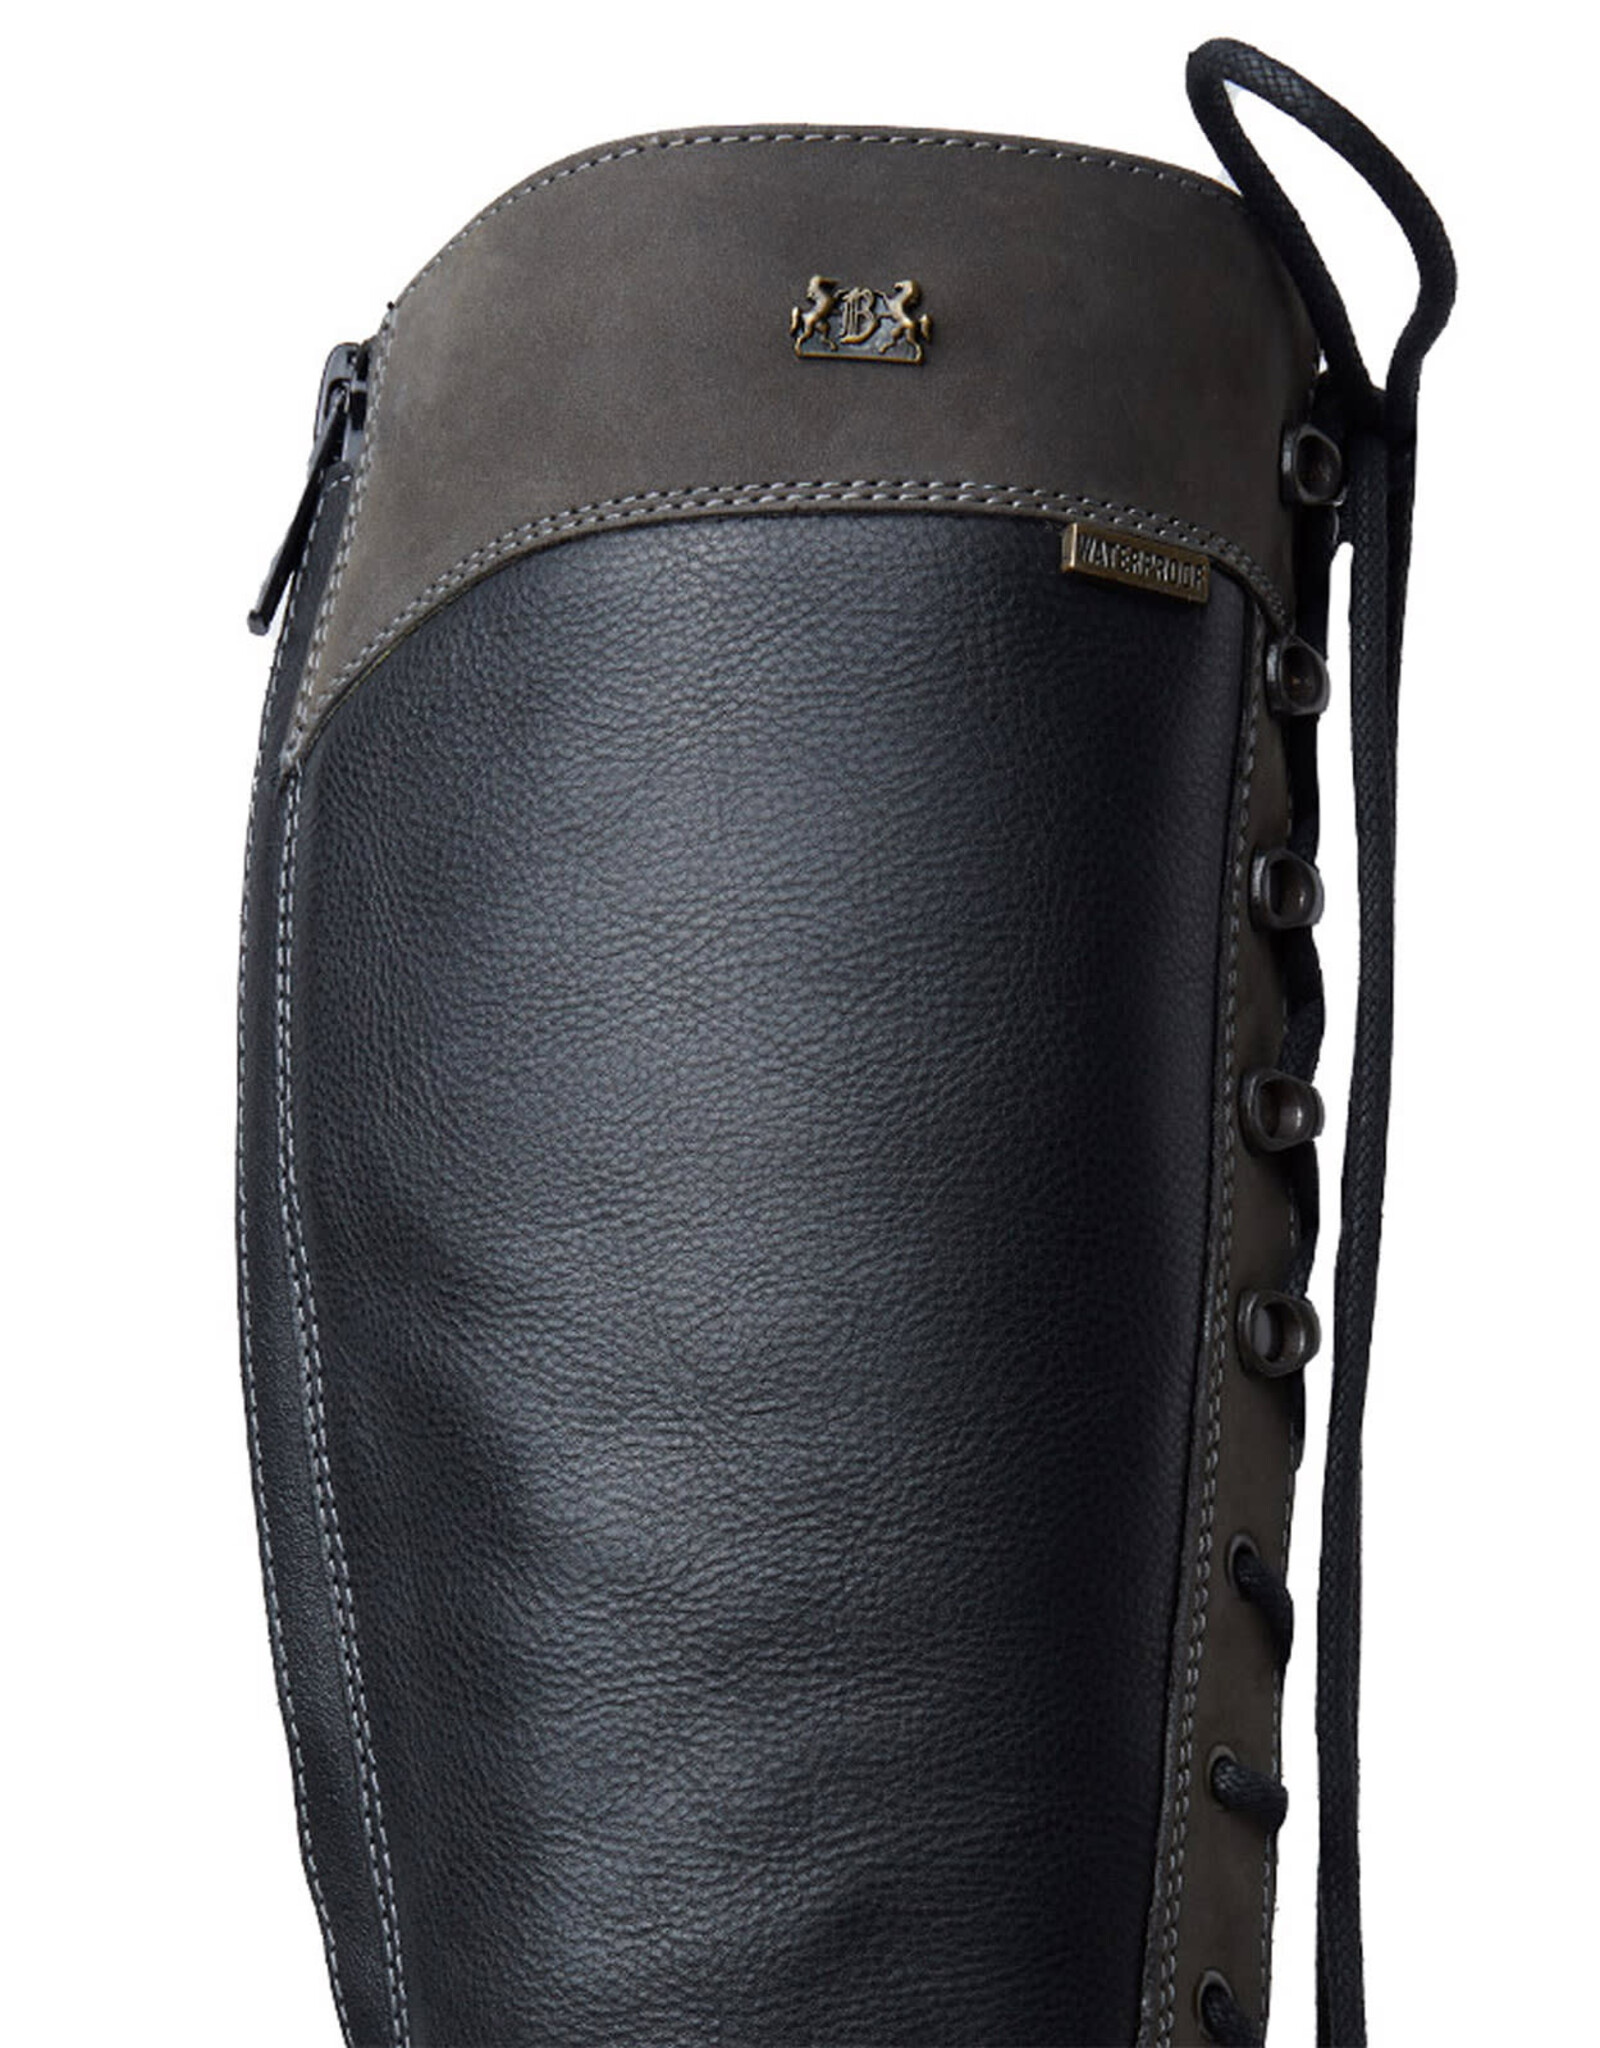 B VERTIGO Cetus Waterproof Tall Boots - Black/Grey